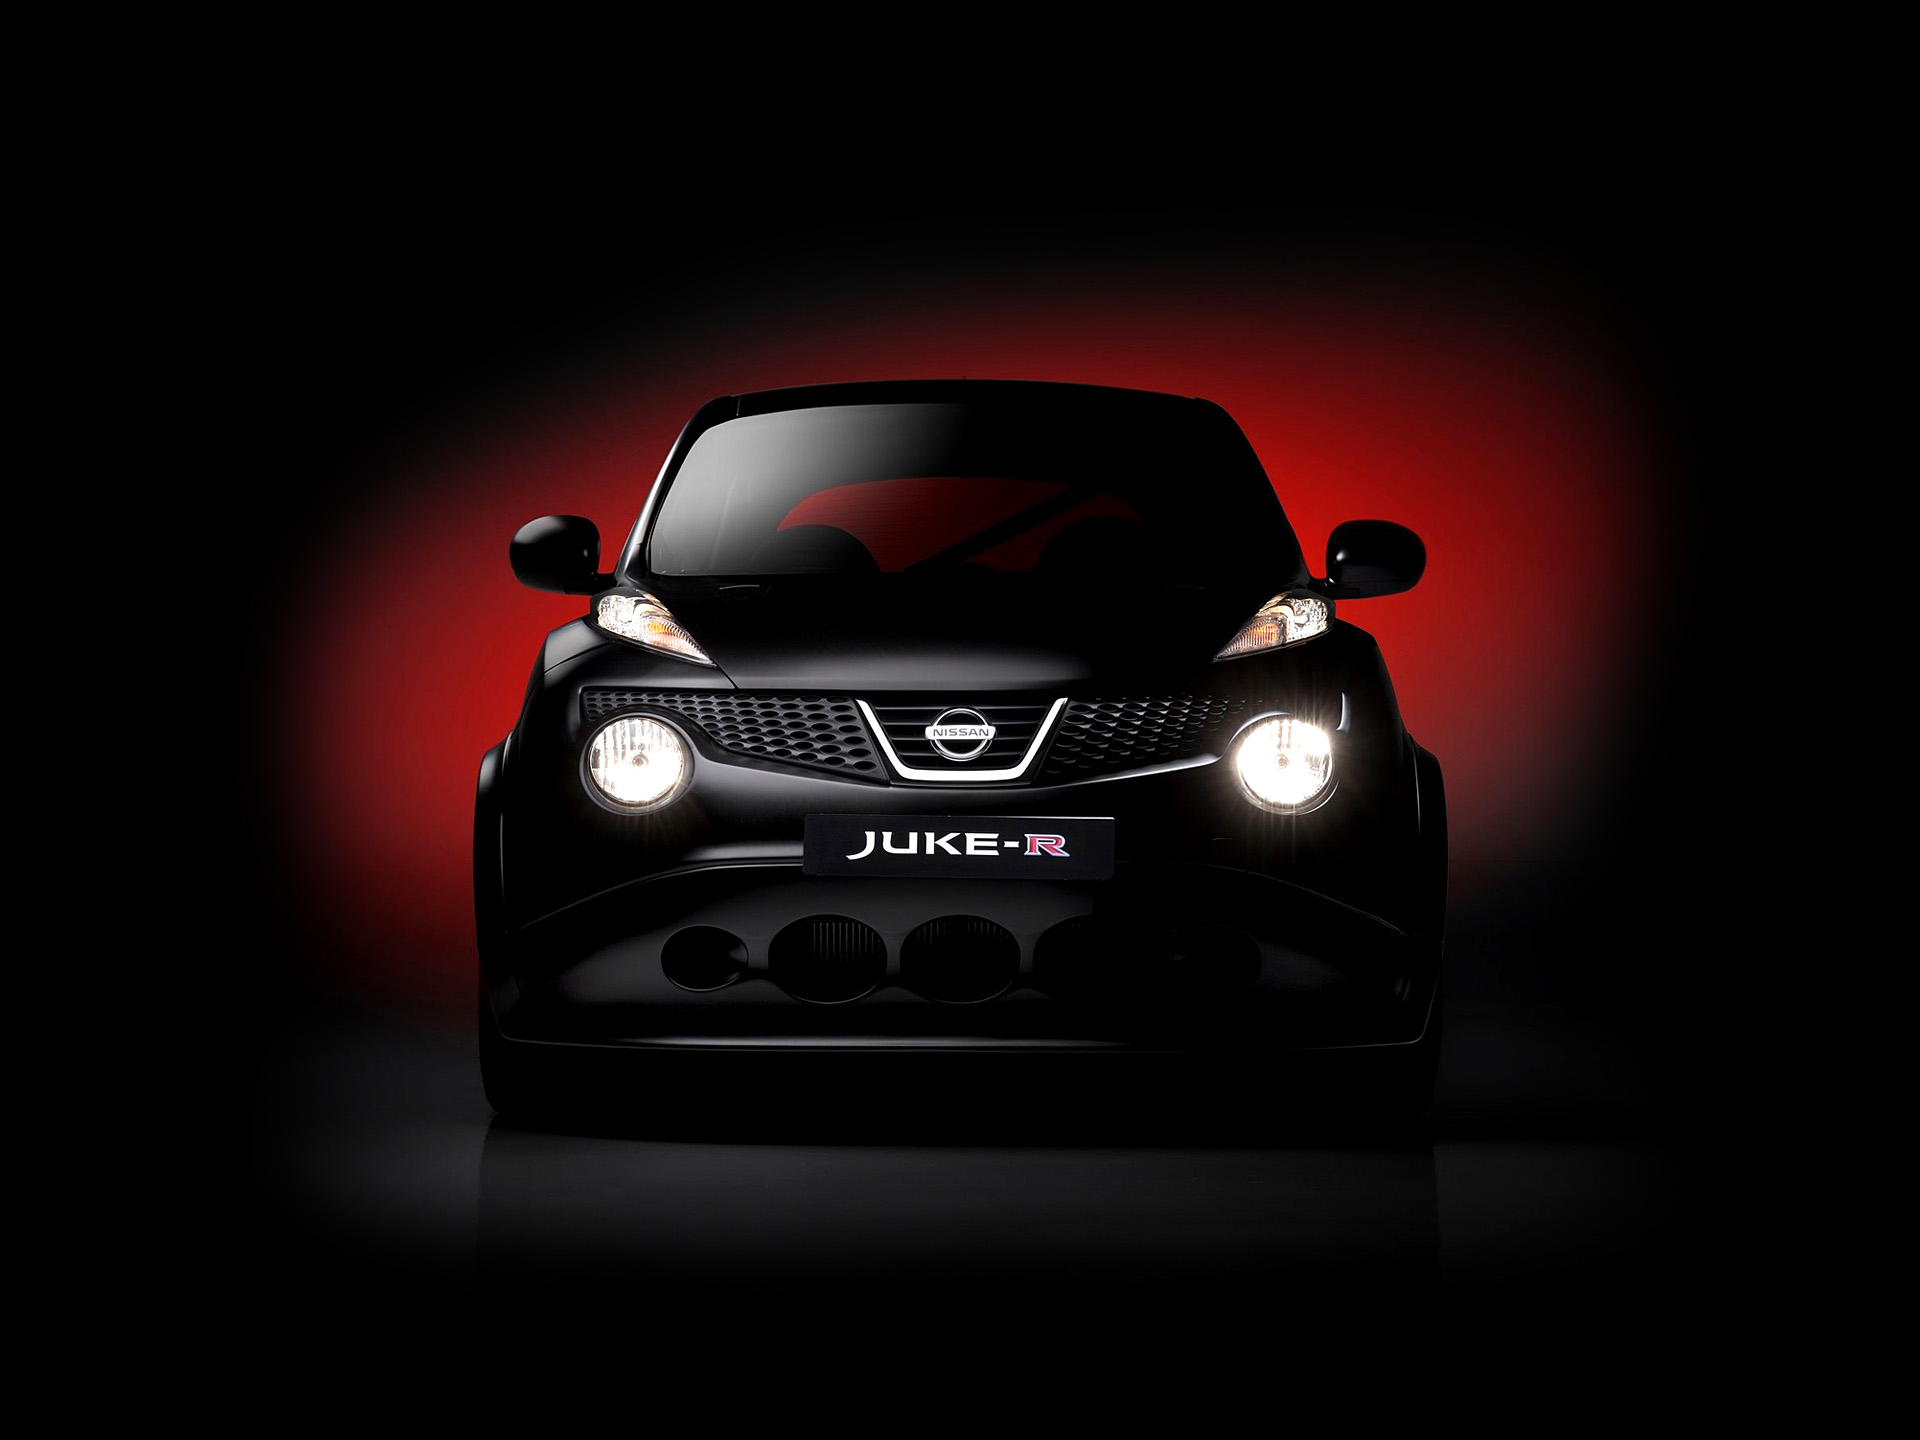  2011 Nissan Juke R Concept Wallpaper.